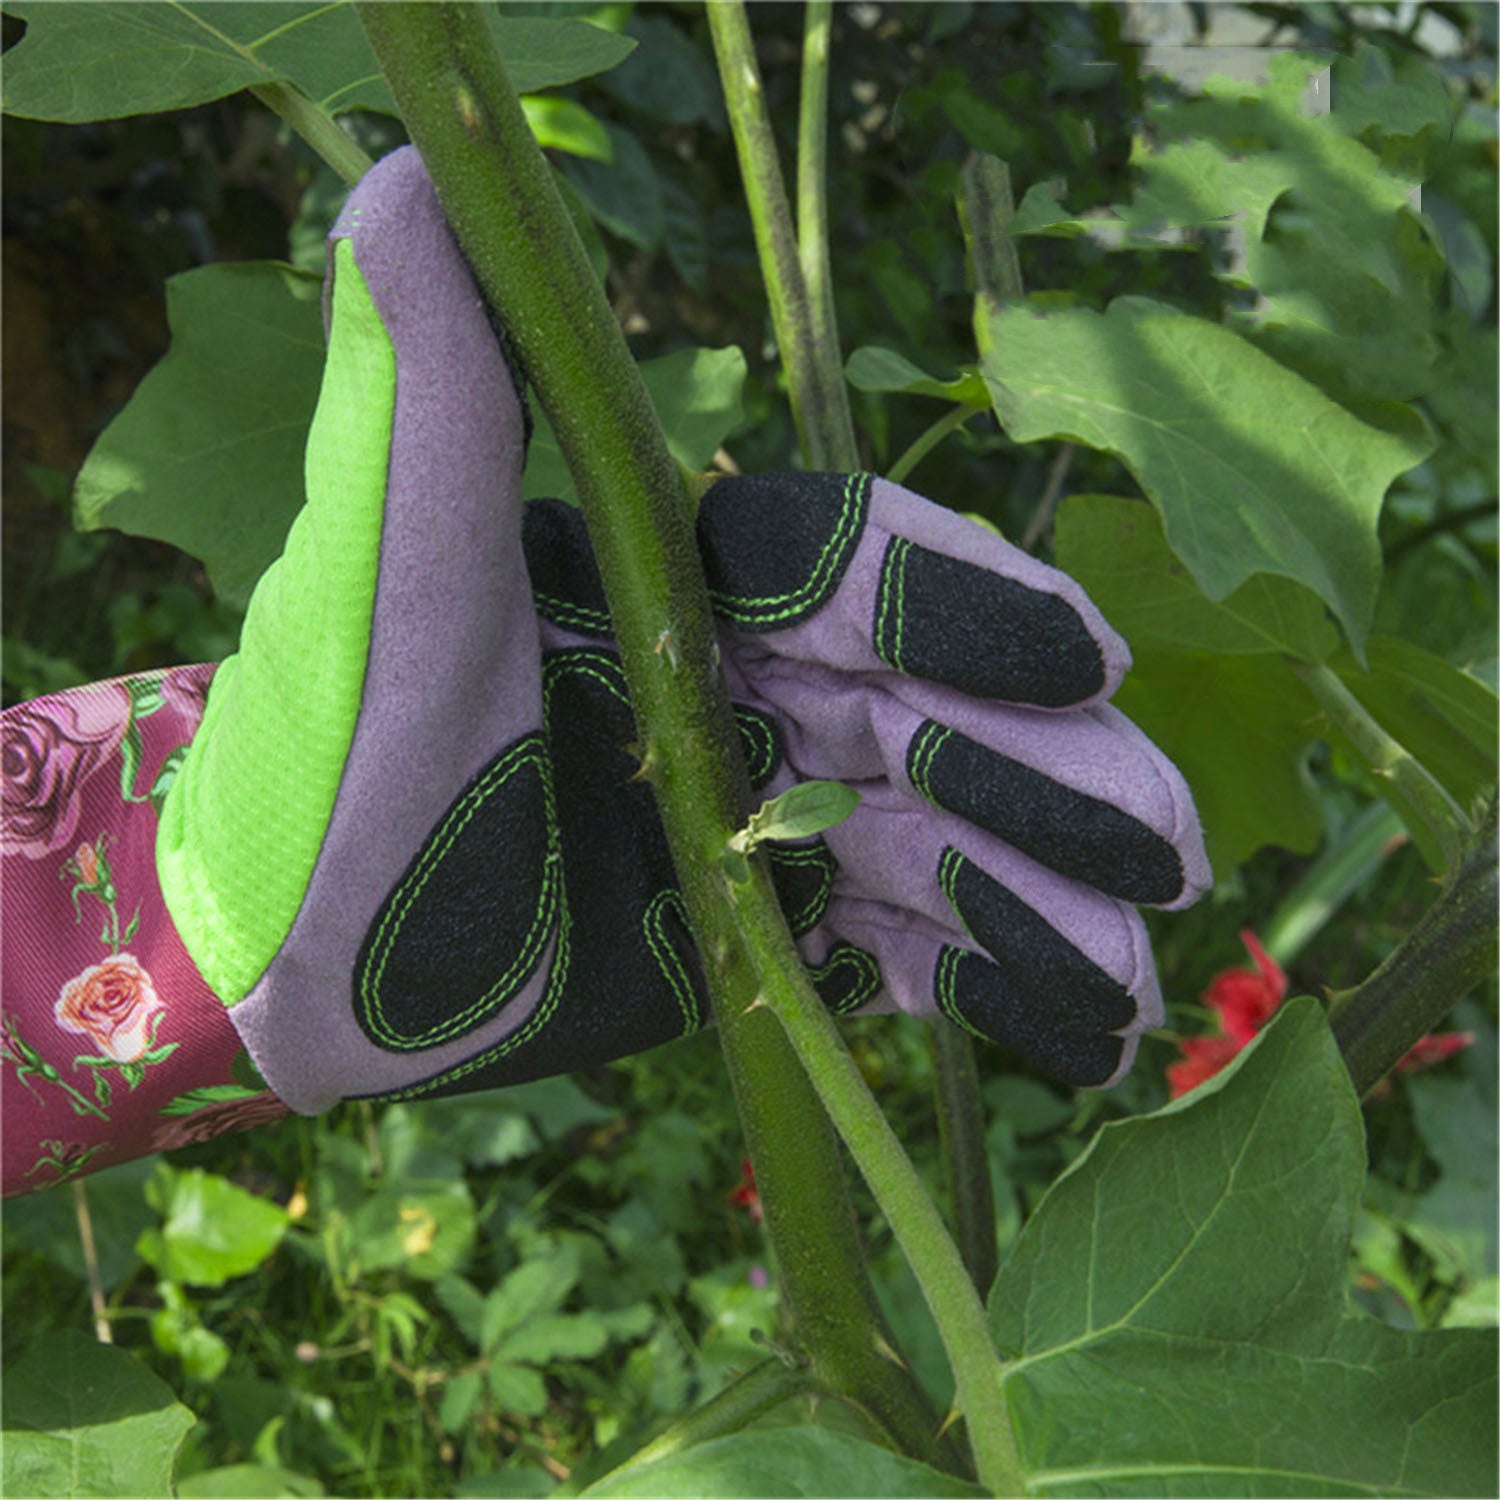 Long Tube Gardening Floral Stab-resistant Gloves